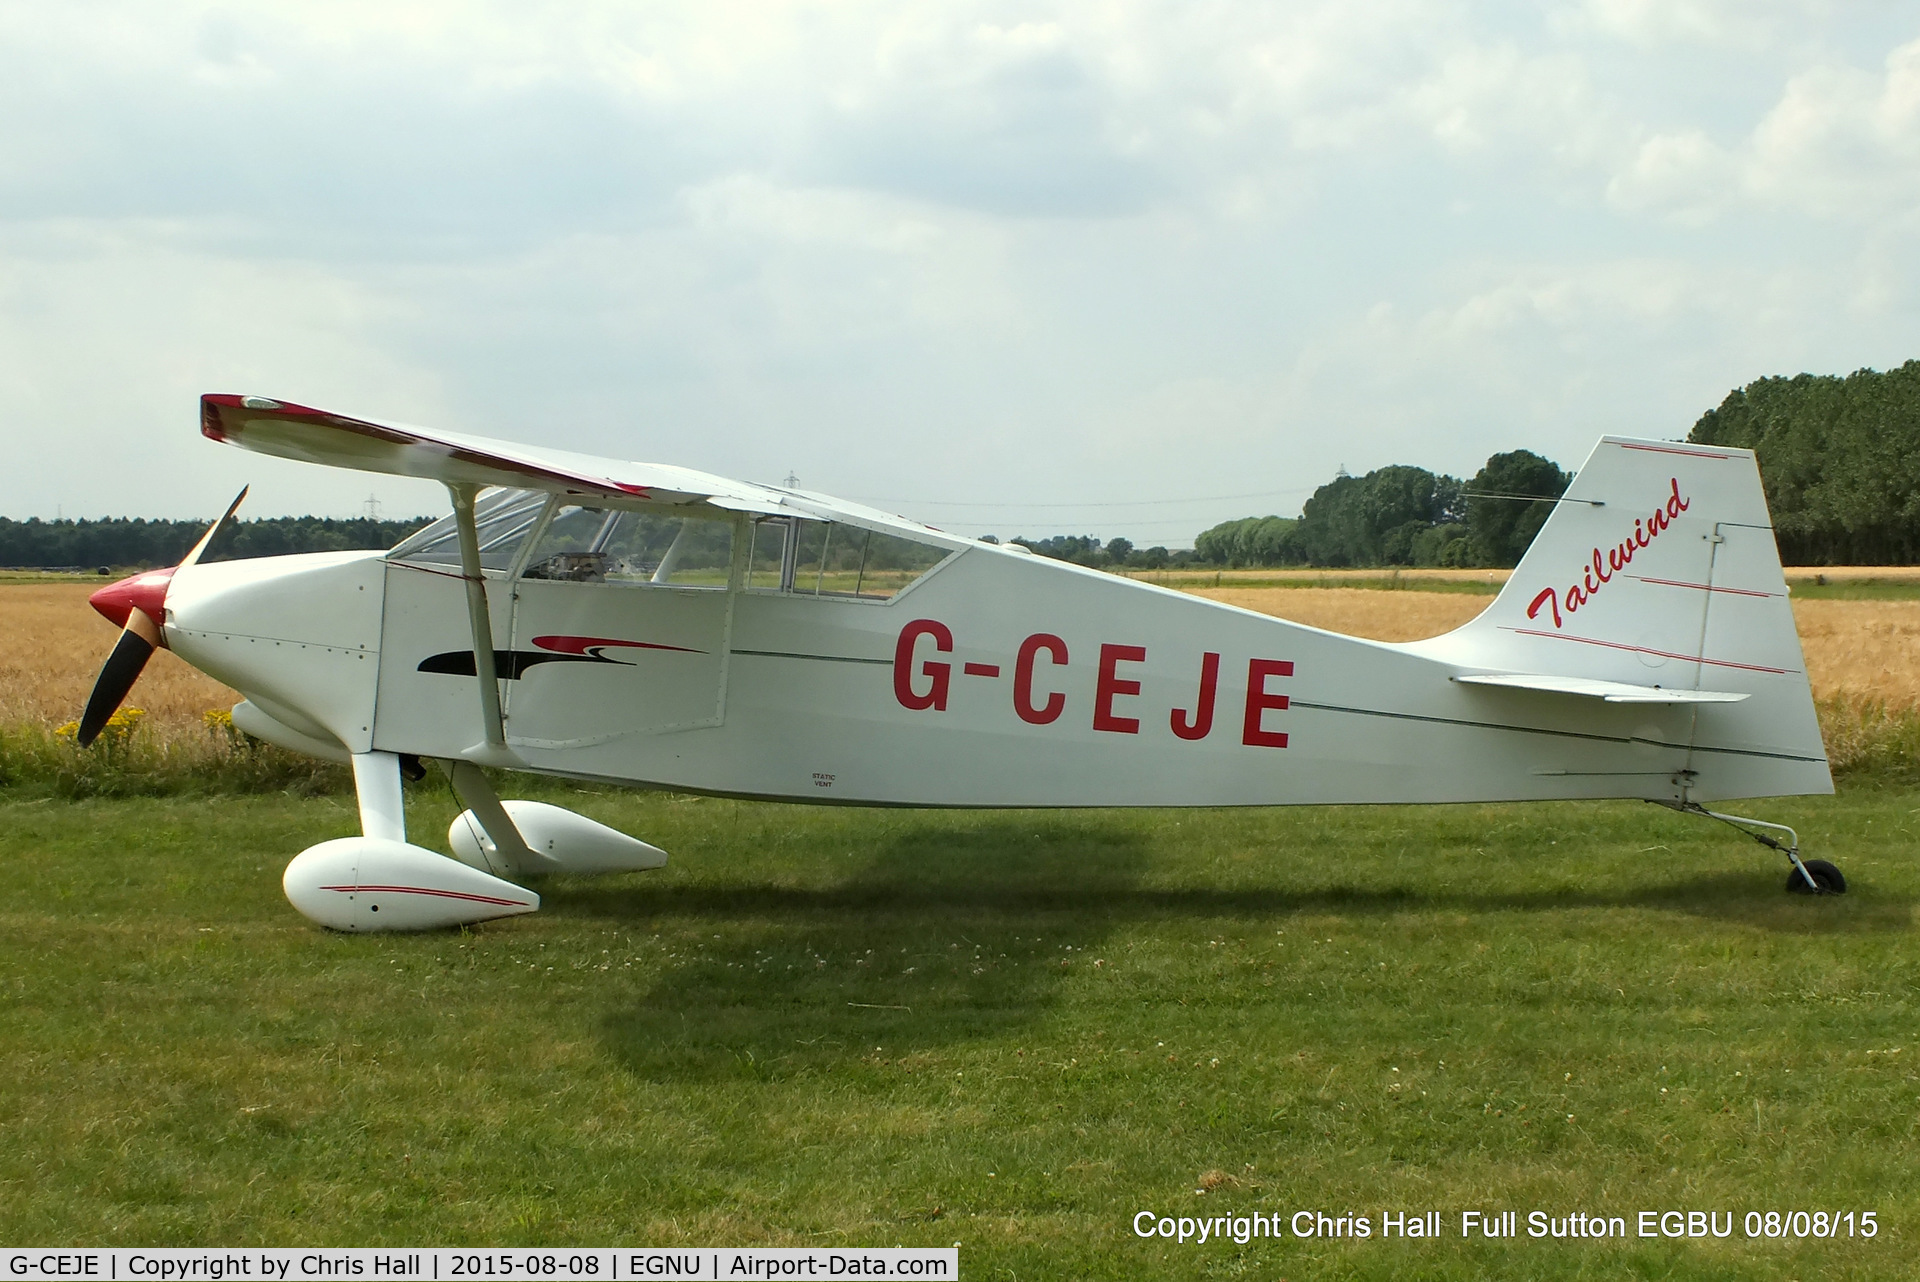 G-CEJE, 2007 Wittman W-10 Tailwind C/N PFA 031-14003, at the Vale of York LAA strut flyin, Full Sutton